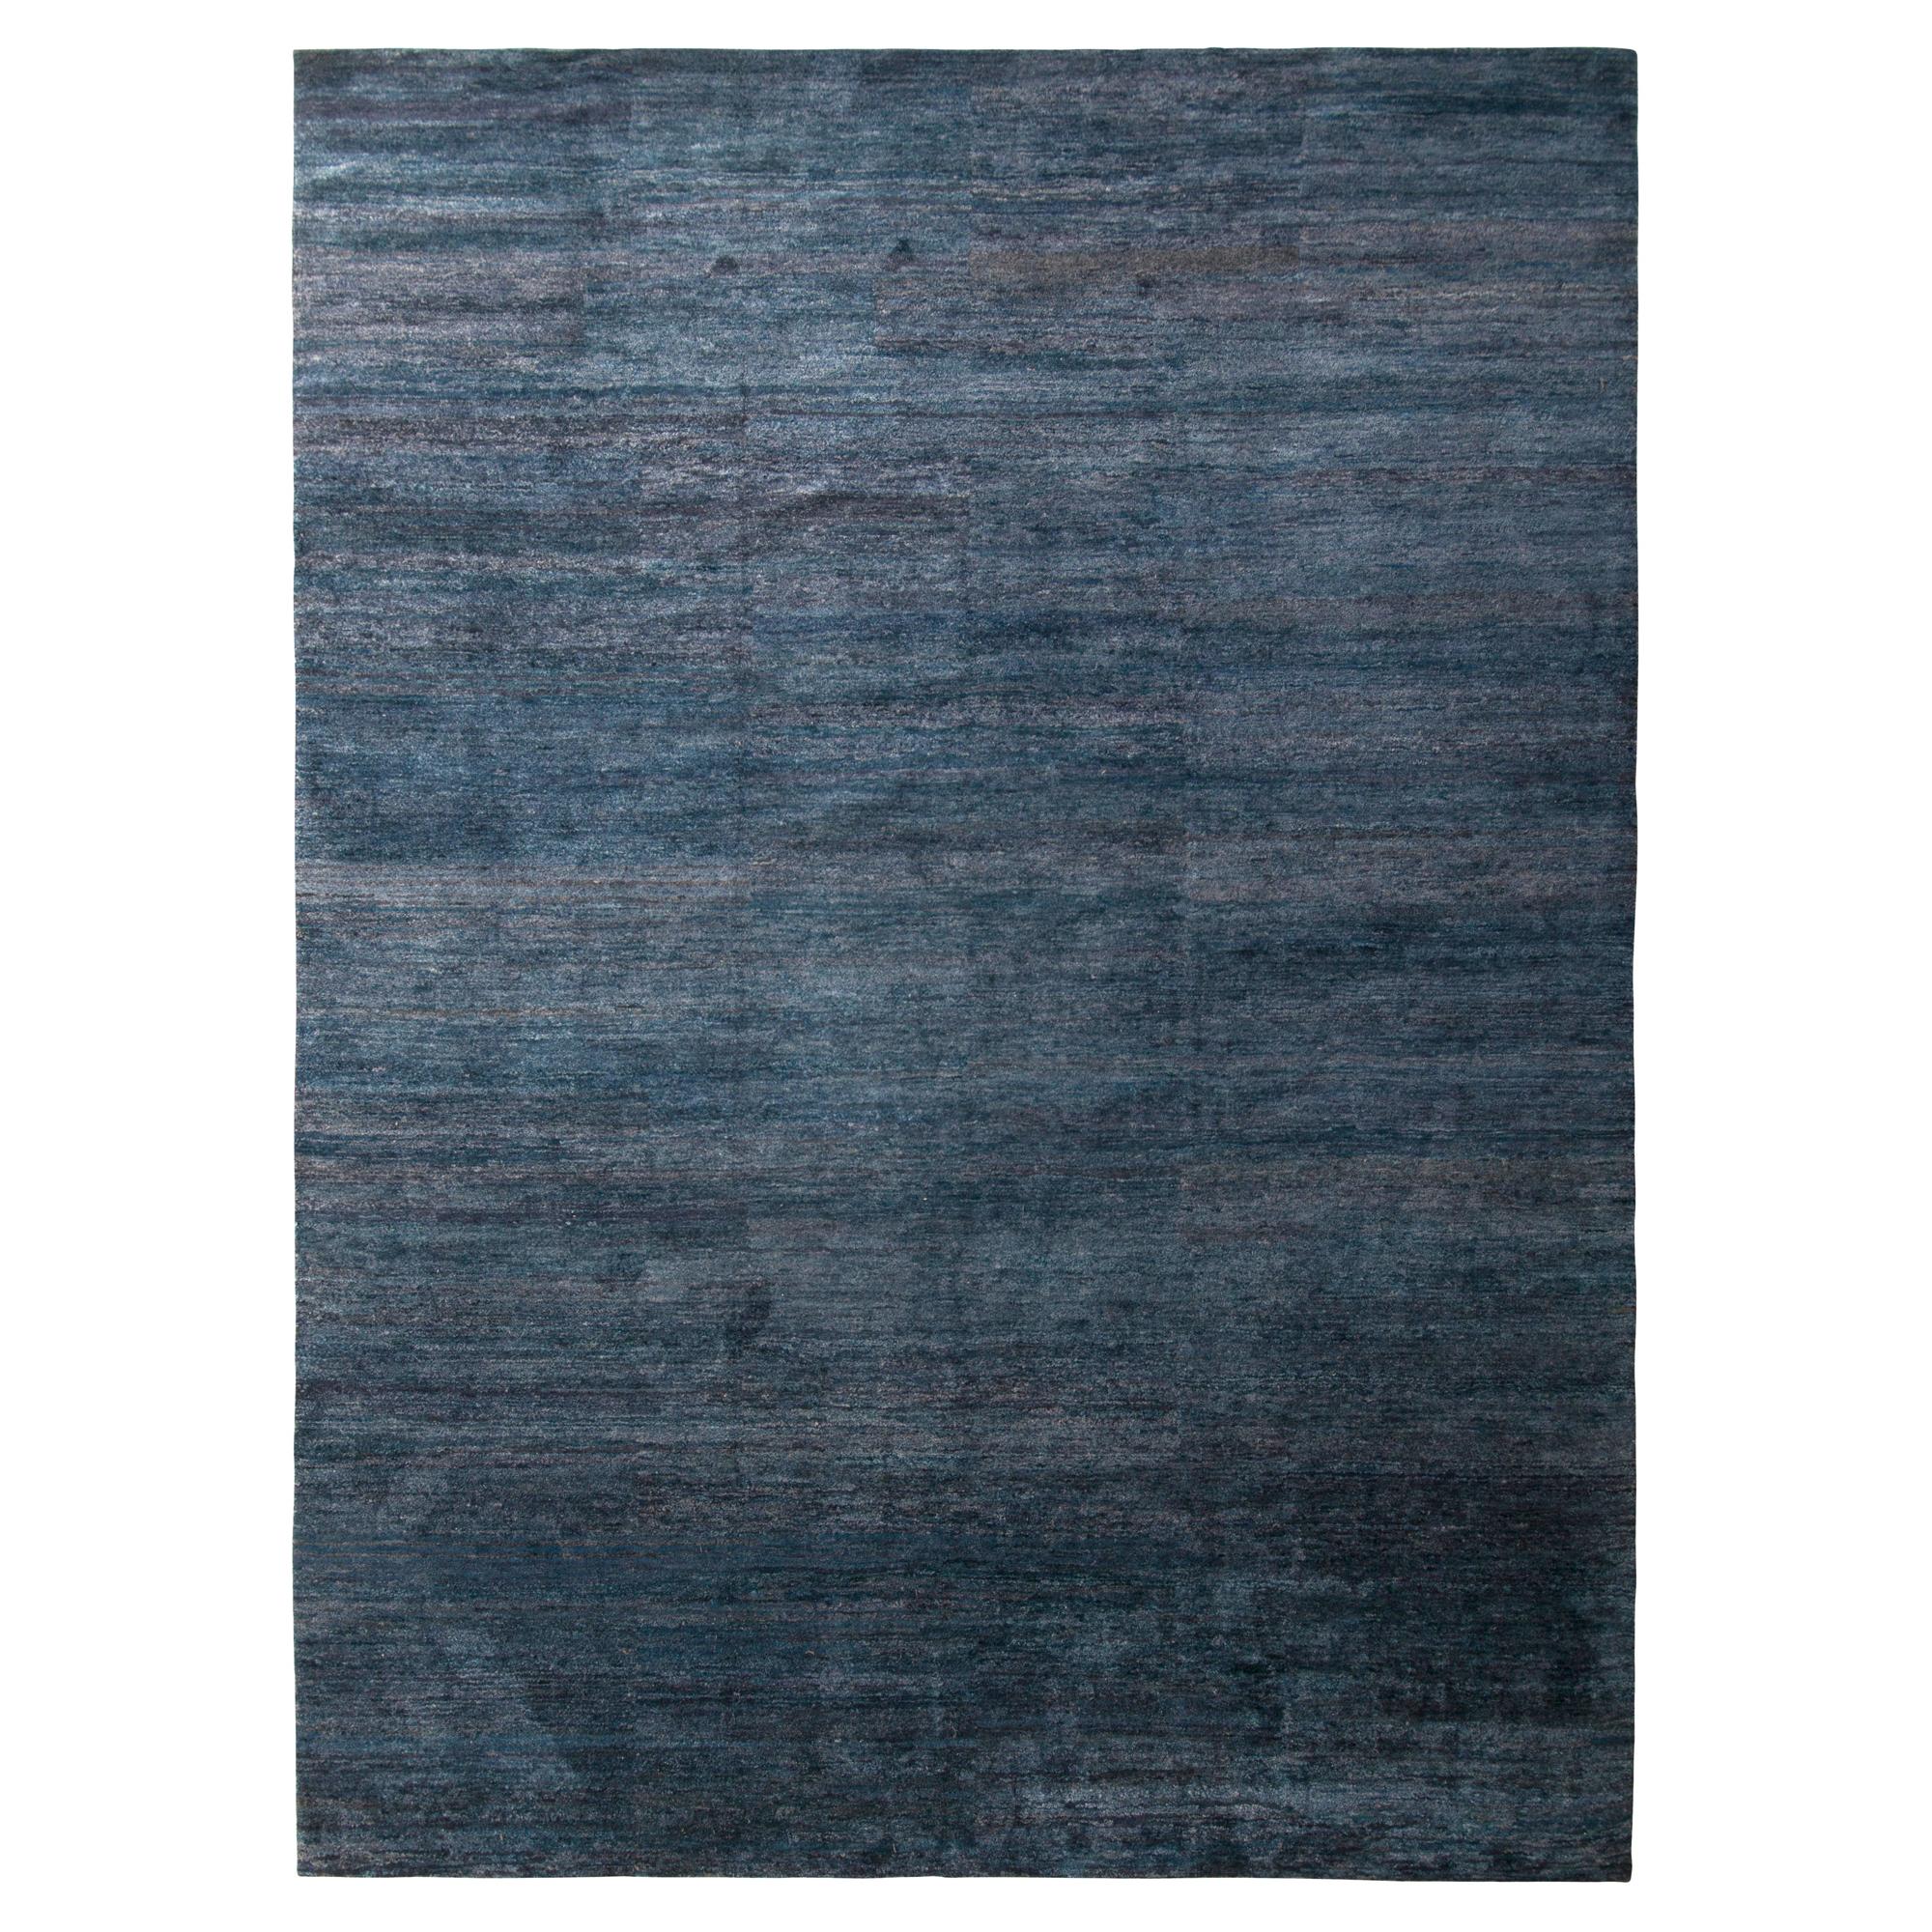 Rug & Kilim’s Textural Plain Modern Rug in Blue Two Tones